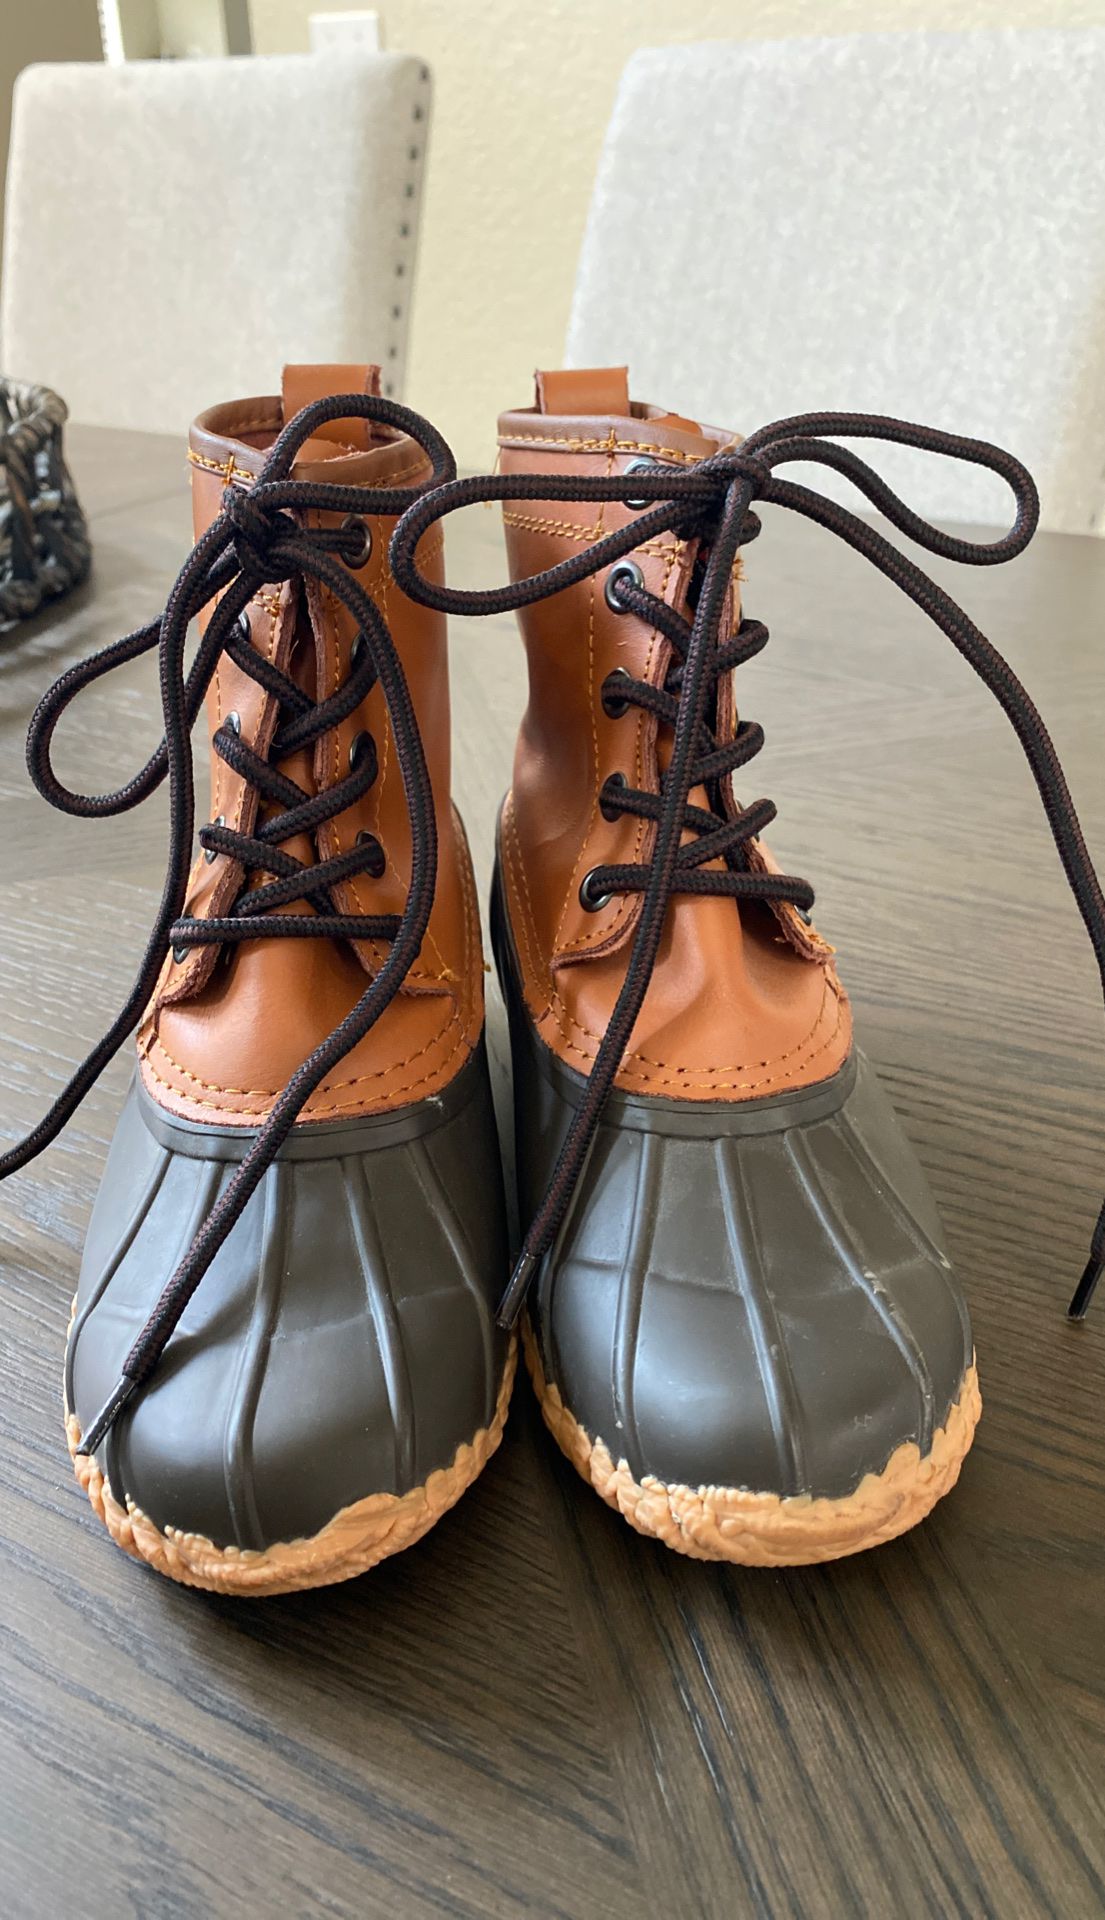 Totes Rain Boots-Size 4 (Kids)—-Botas para la Lluvia